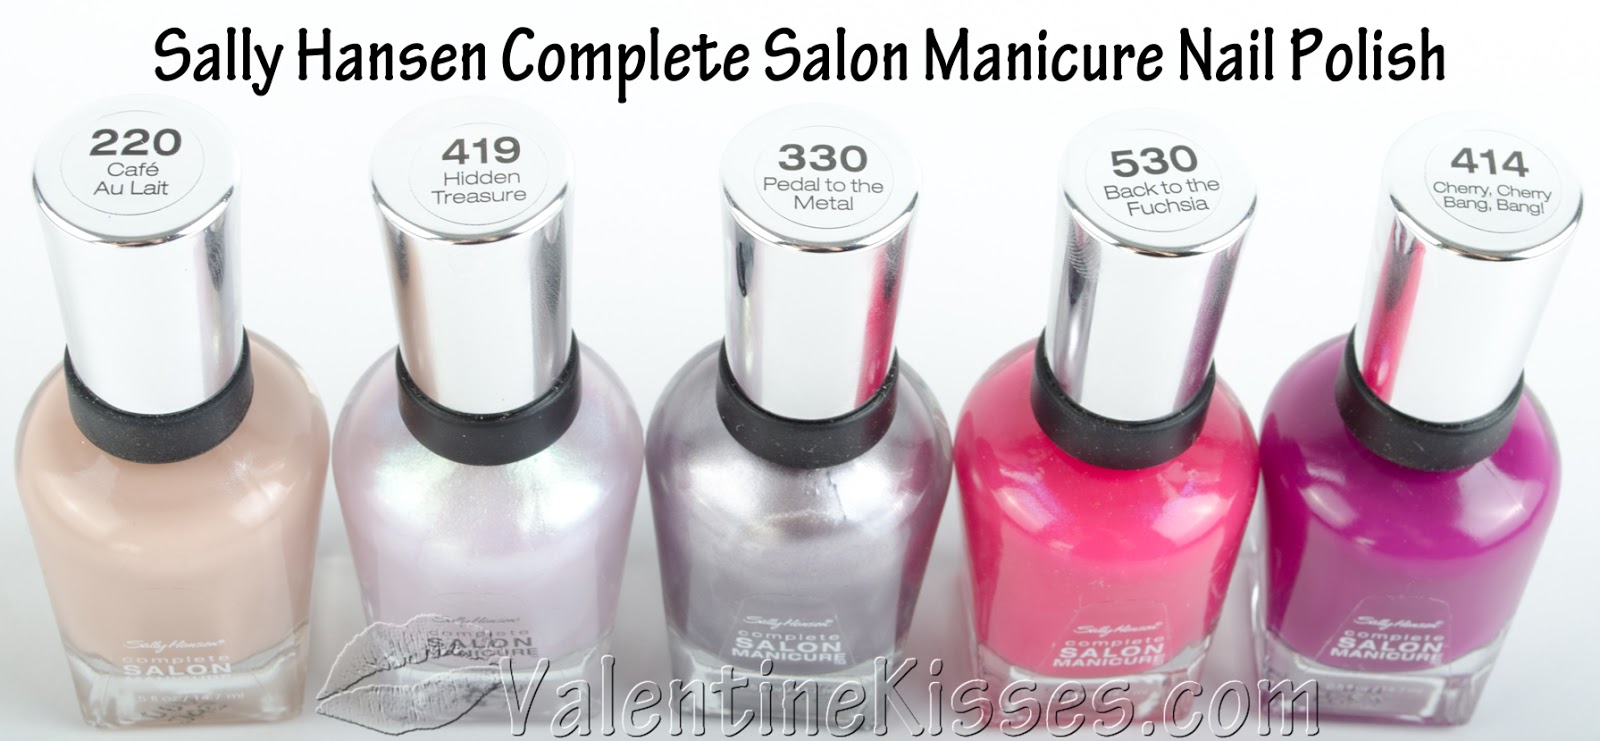 5. Sally Hansen Complete Salon Manicure Nail Polish - Choose Your Color - wide 3